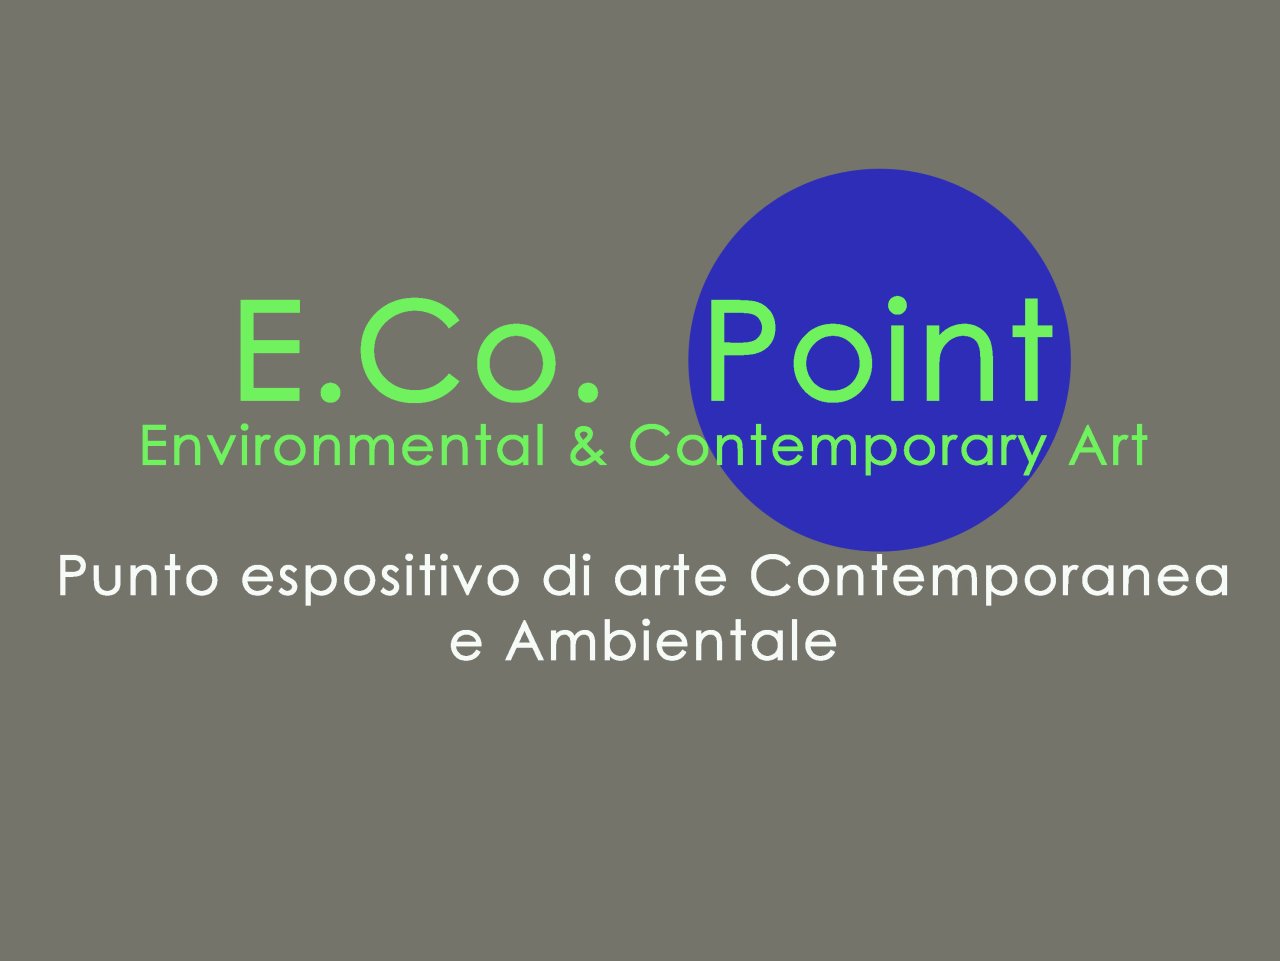 E.CO.POINT - Environmental and Contemporary Art